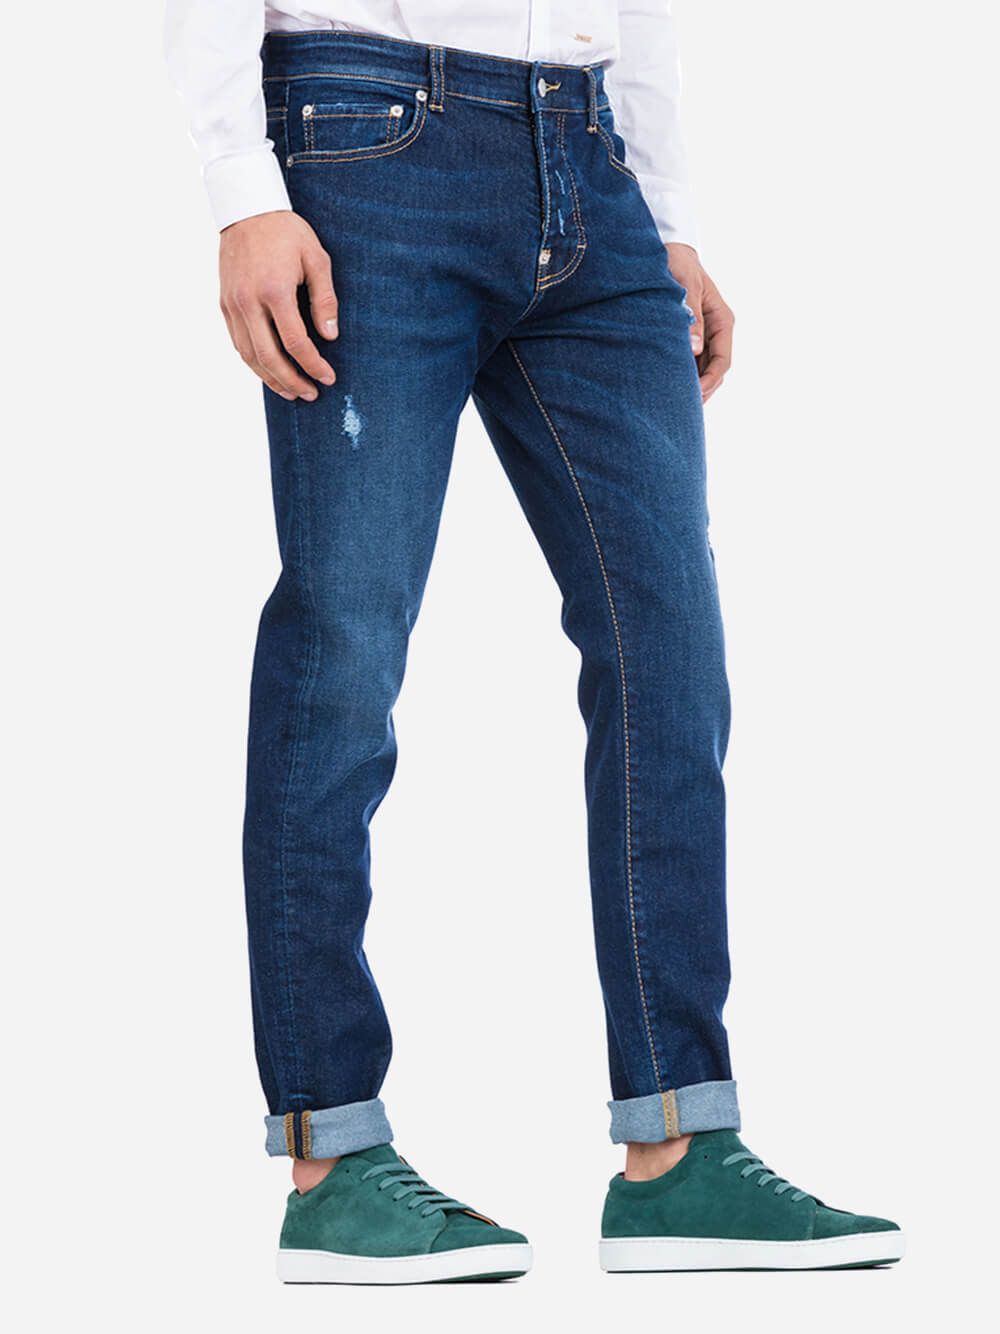 Classy Dude Jeans | Inimigo Clothing